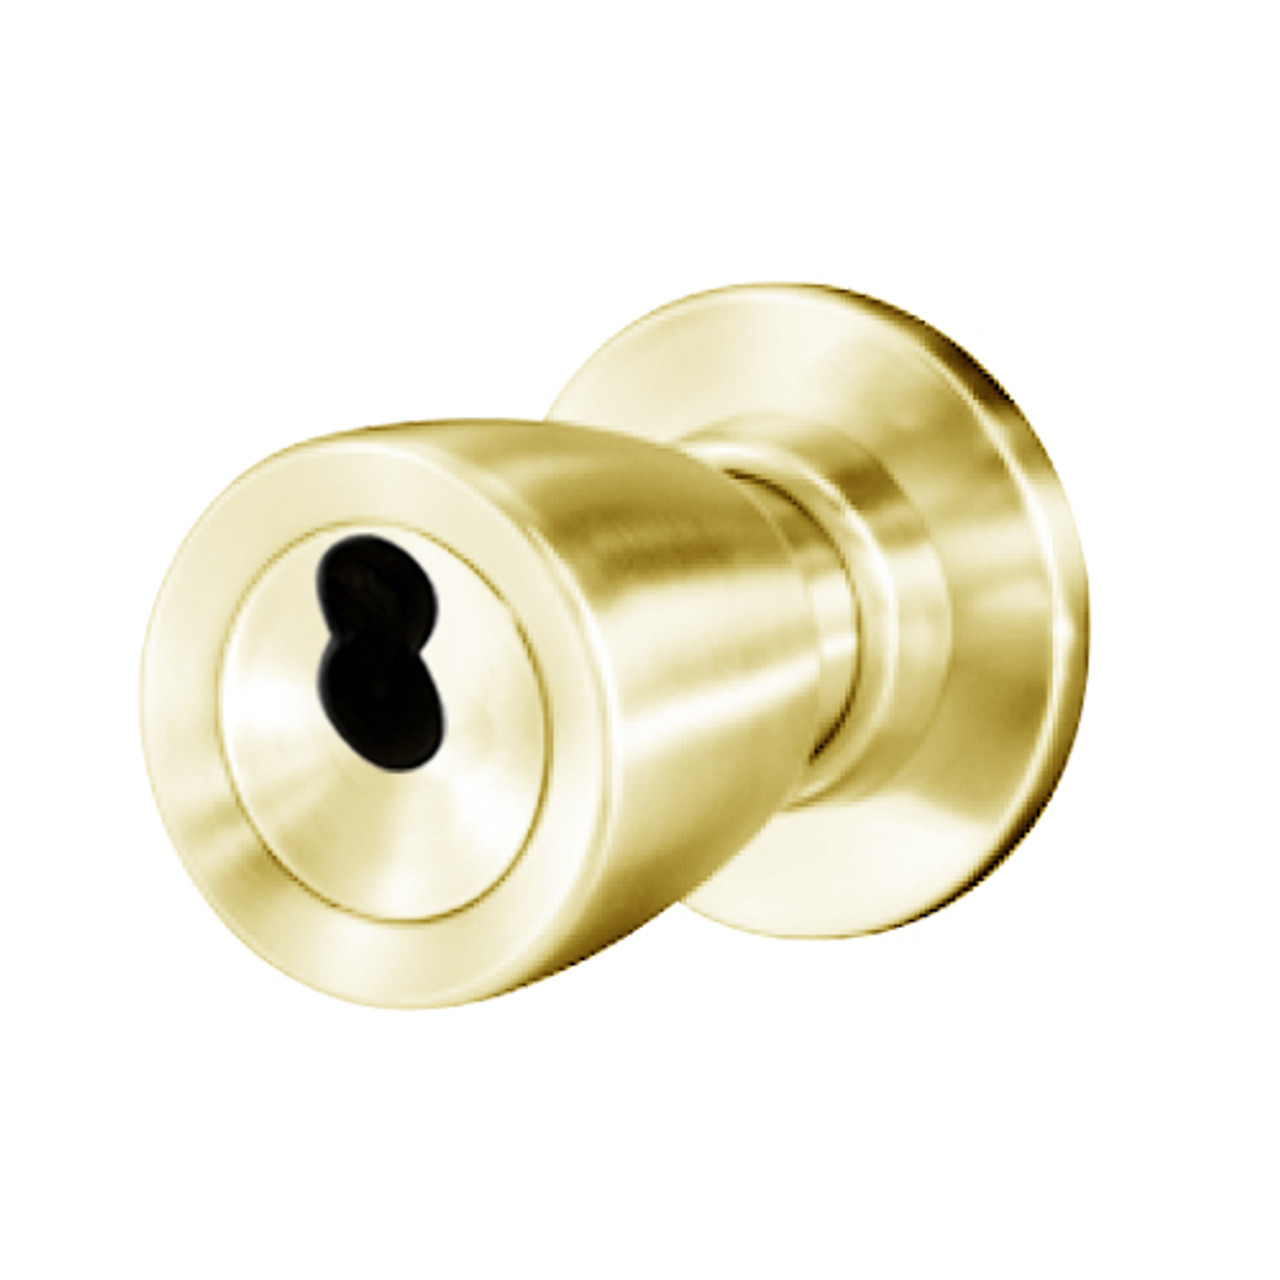 8K37B6CSTK605 Best 8K Series Office Heavy Duty Cylindrical Knob Locks with Tulip Style in Bright Brass